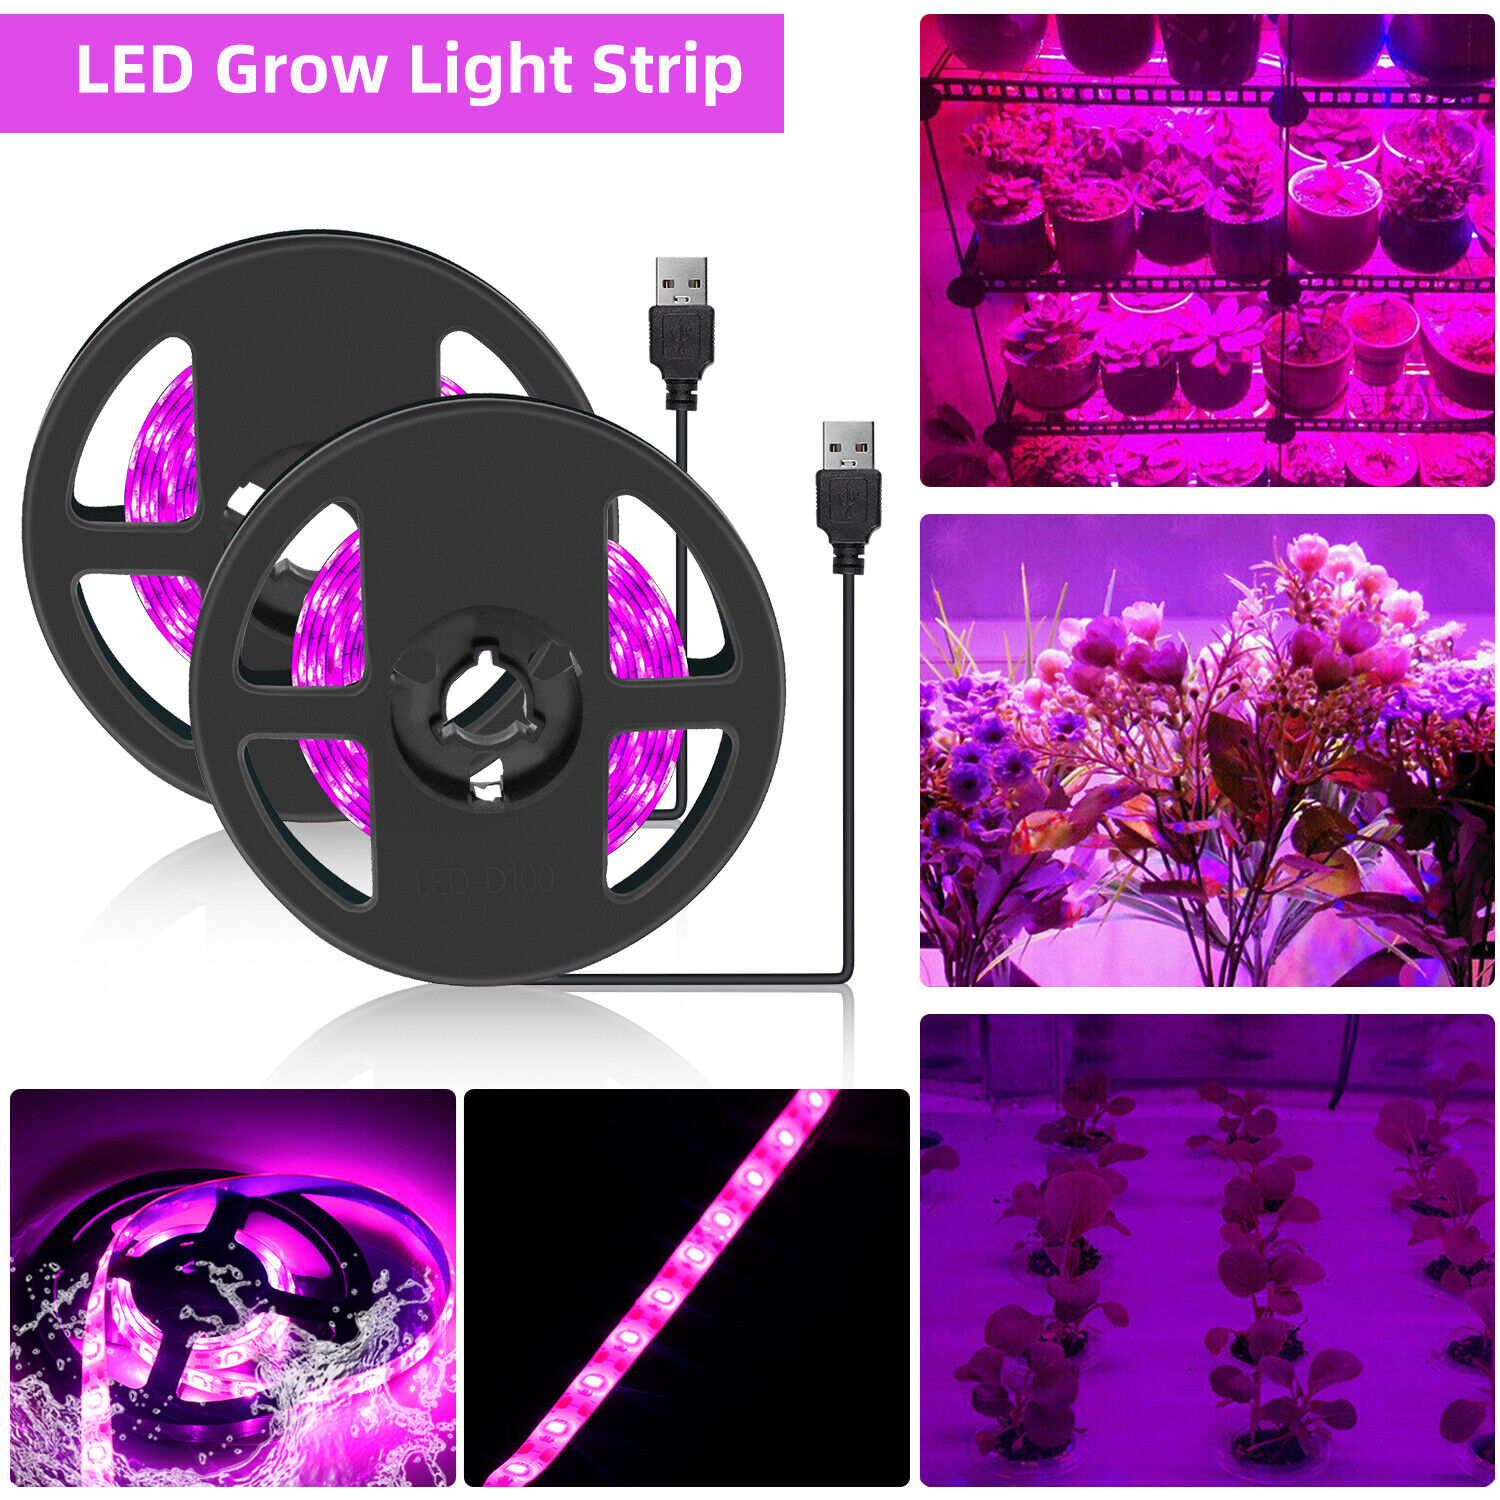 LED Grow Light Strip USB Powered Full Spectrum Lamp Waterproof Indoor Plant Vegs